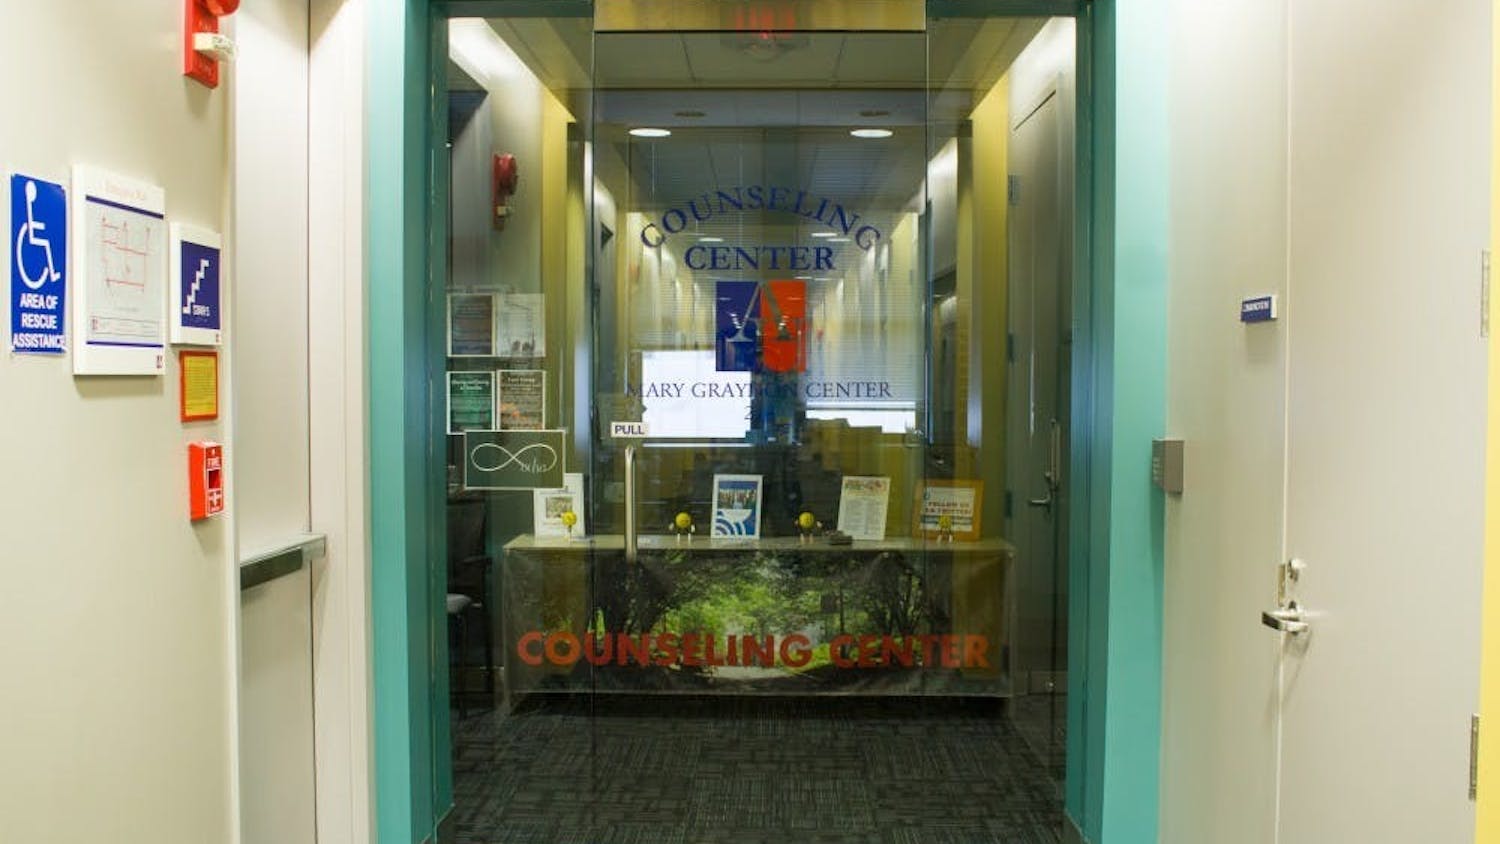 Counseling Center Stock Image.jpg